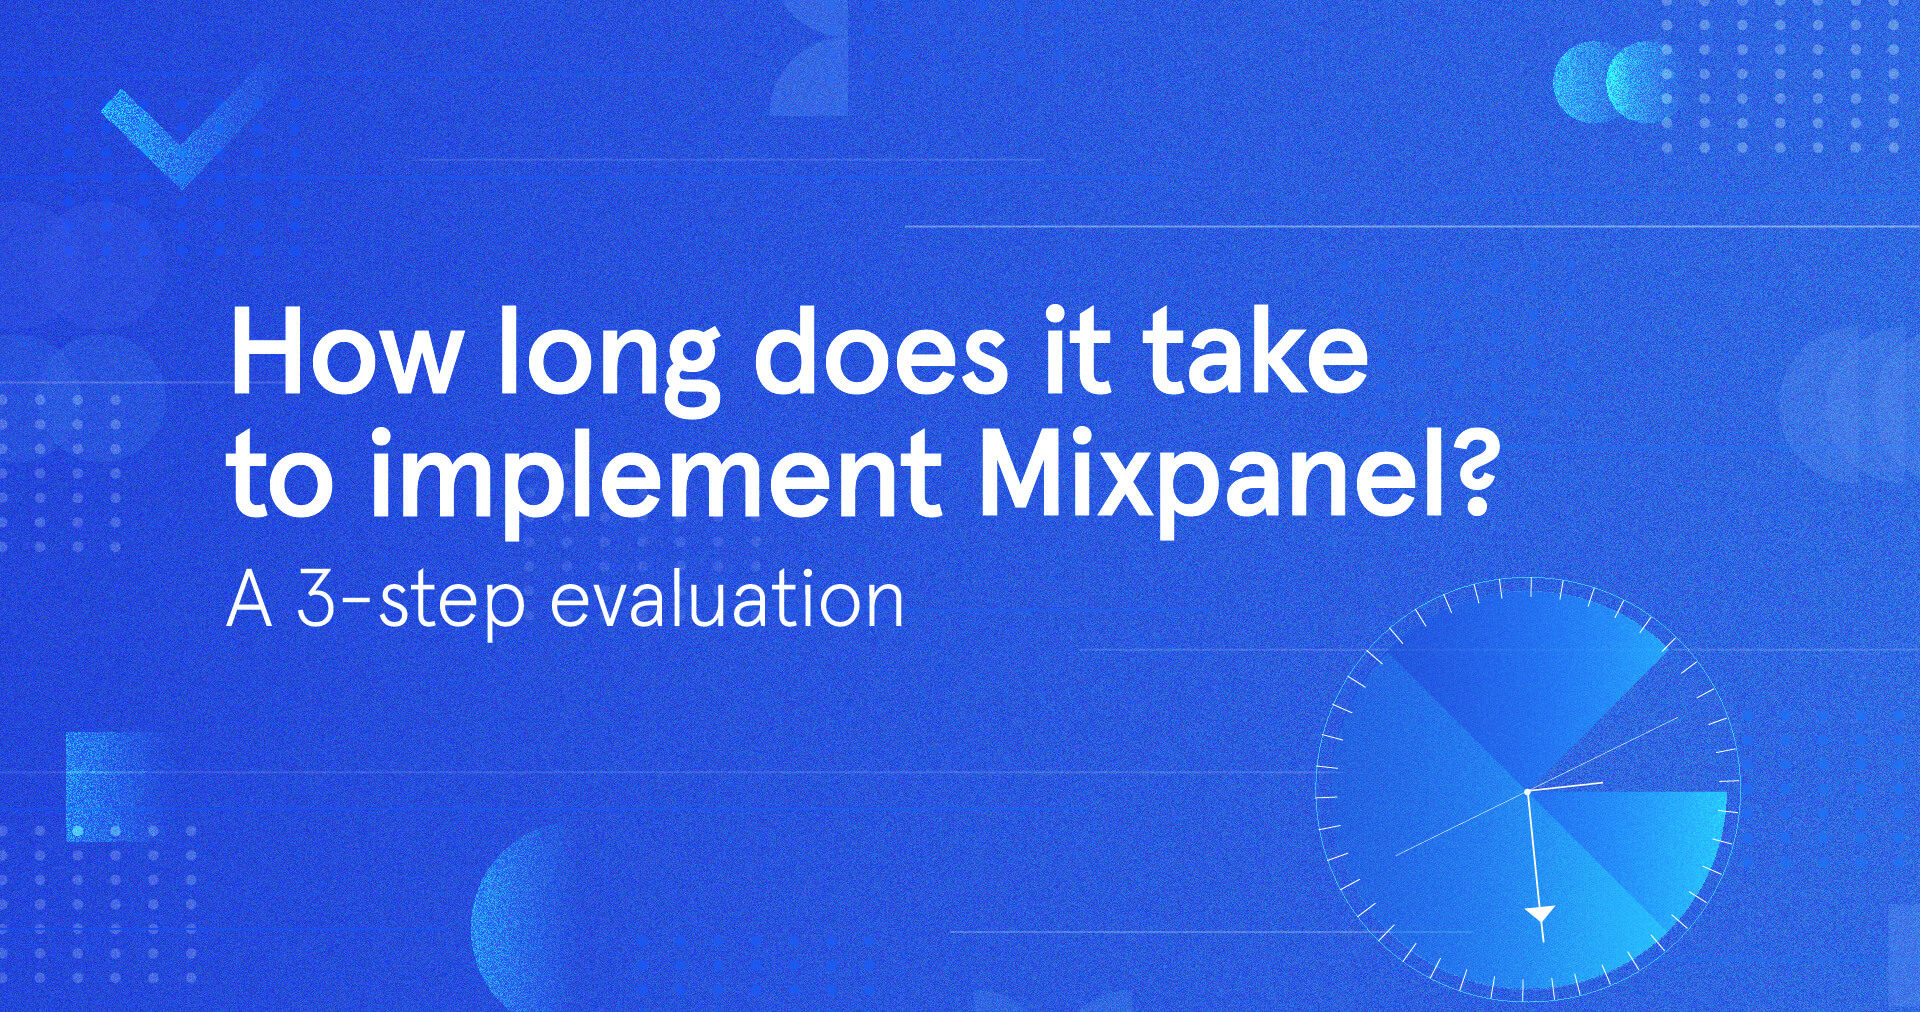 Mixpanel-Implementation-Final-Compressed